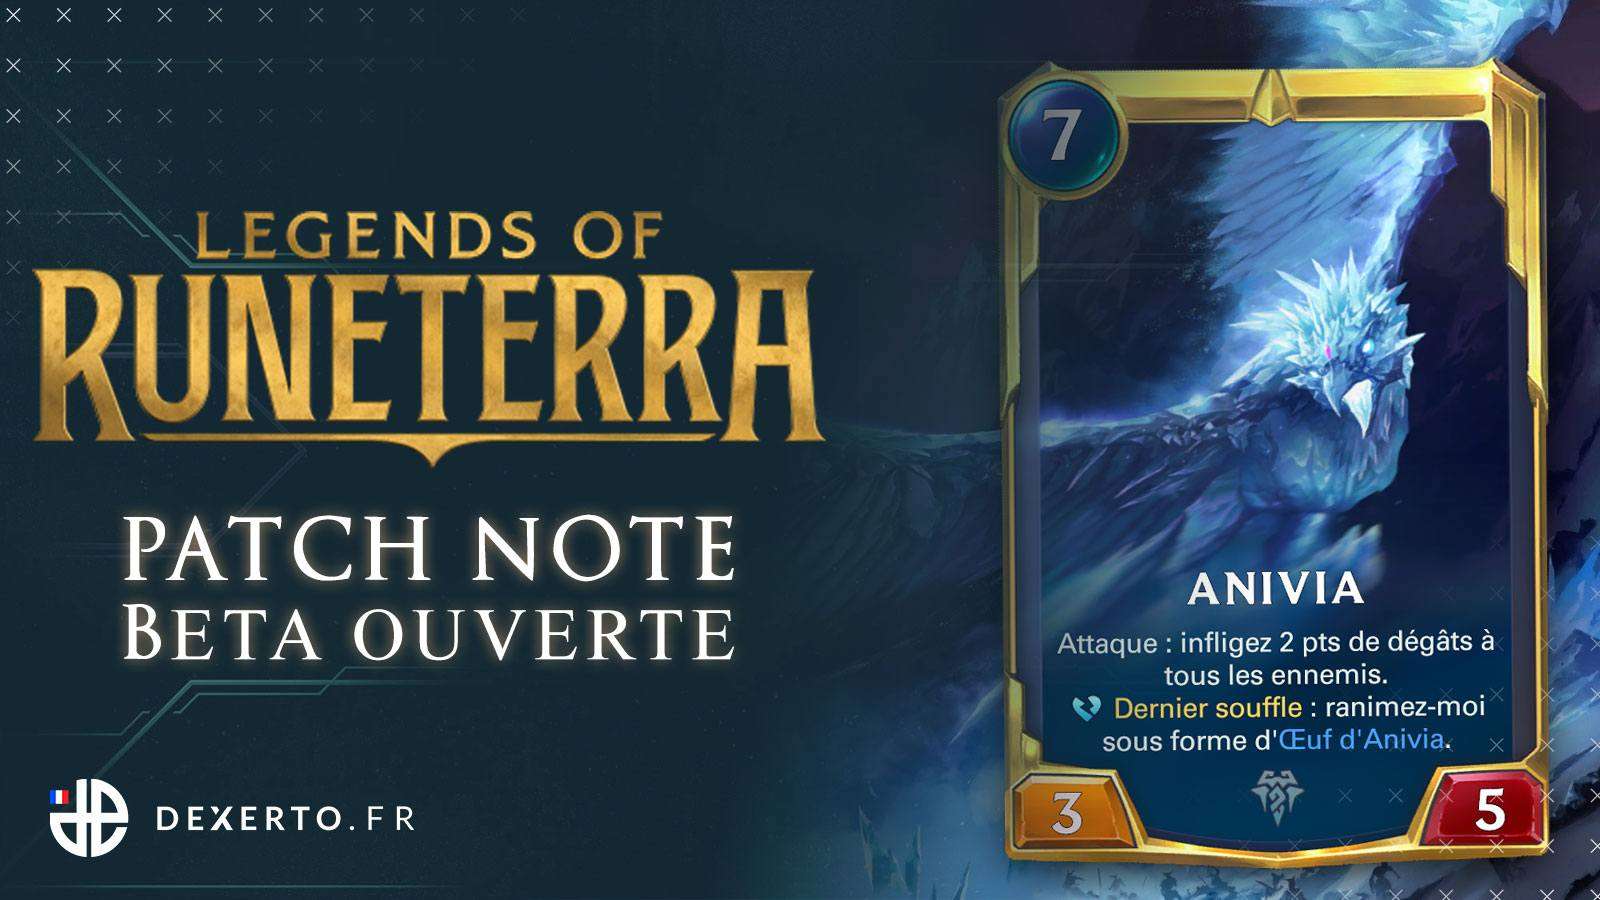 Patch note de Legends of Runeterra